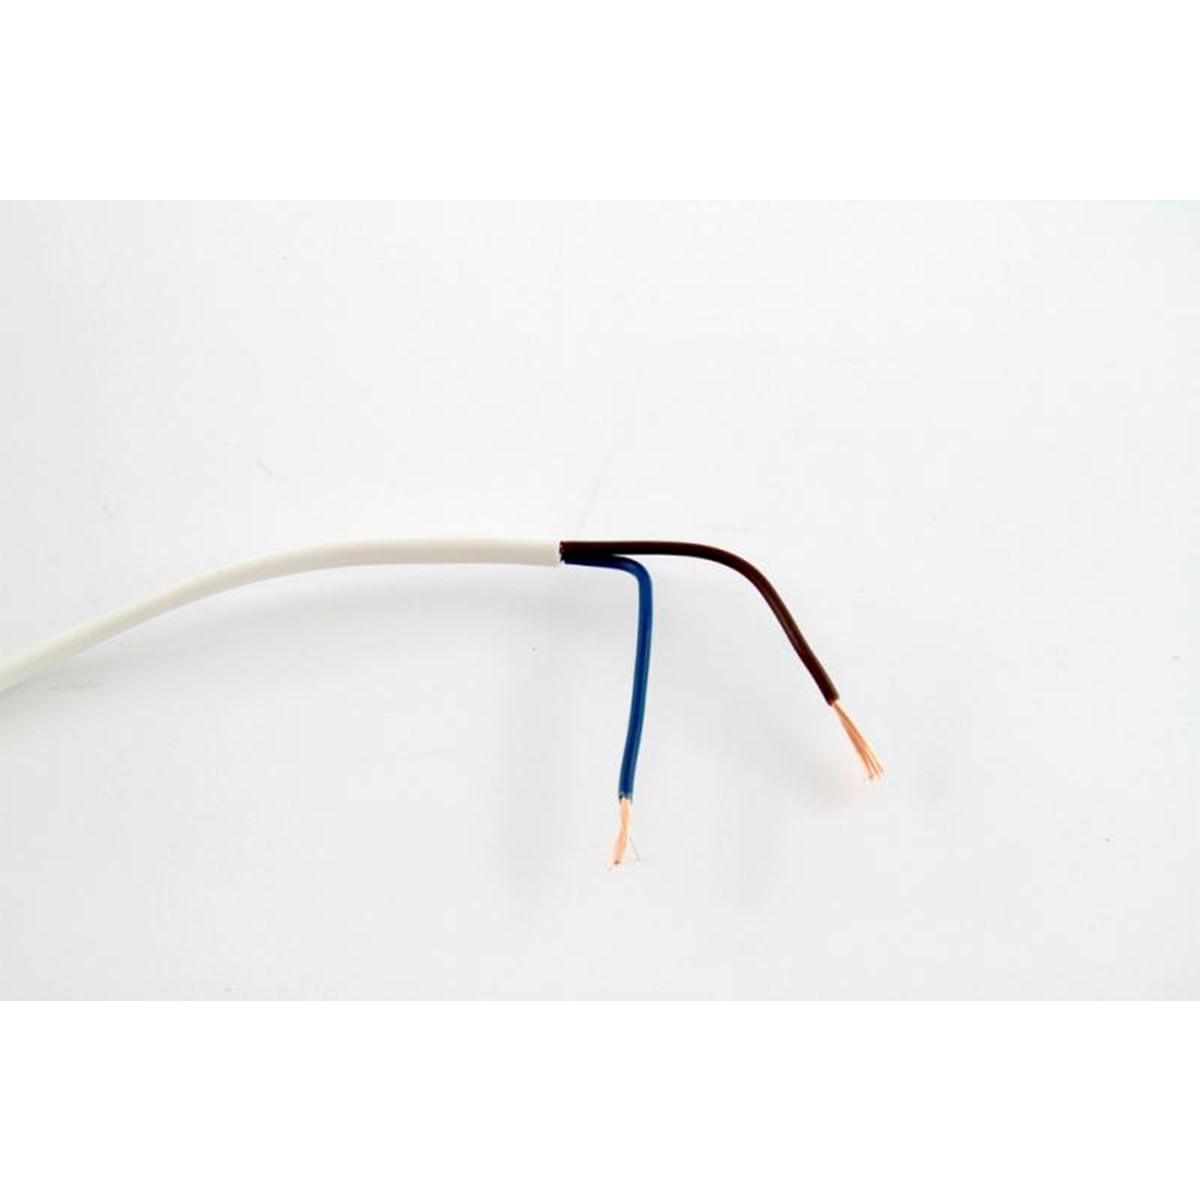 Elektrokabel OMYp 2x0,75mm2 biały 100m H03VVH2-F kabel przewód